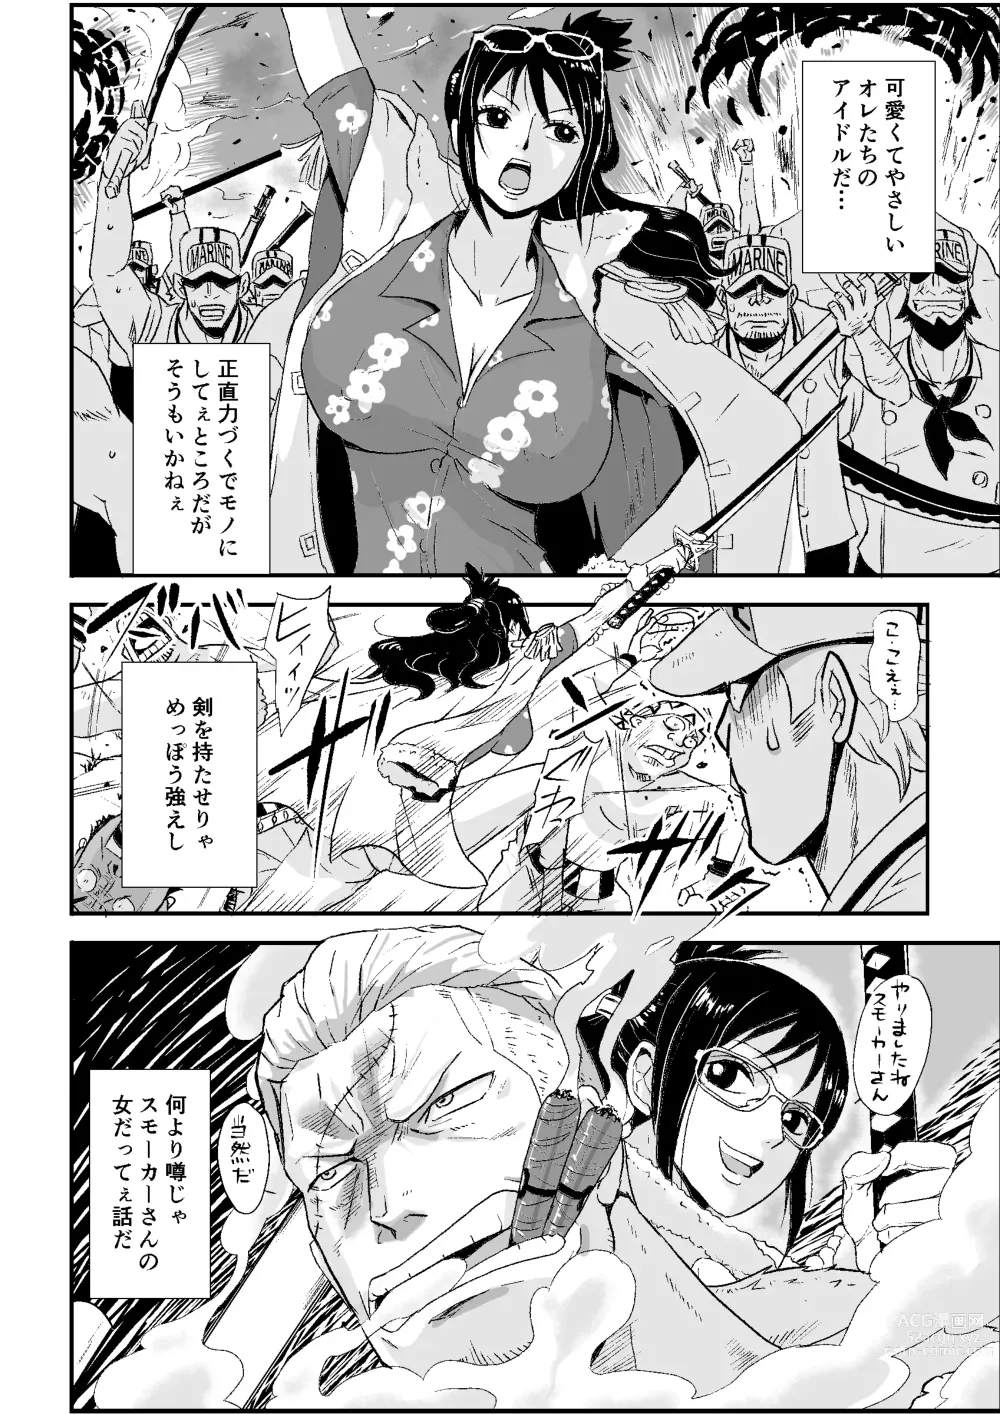 Page 5 of doujinshi Kaigun no Onna